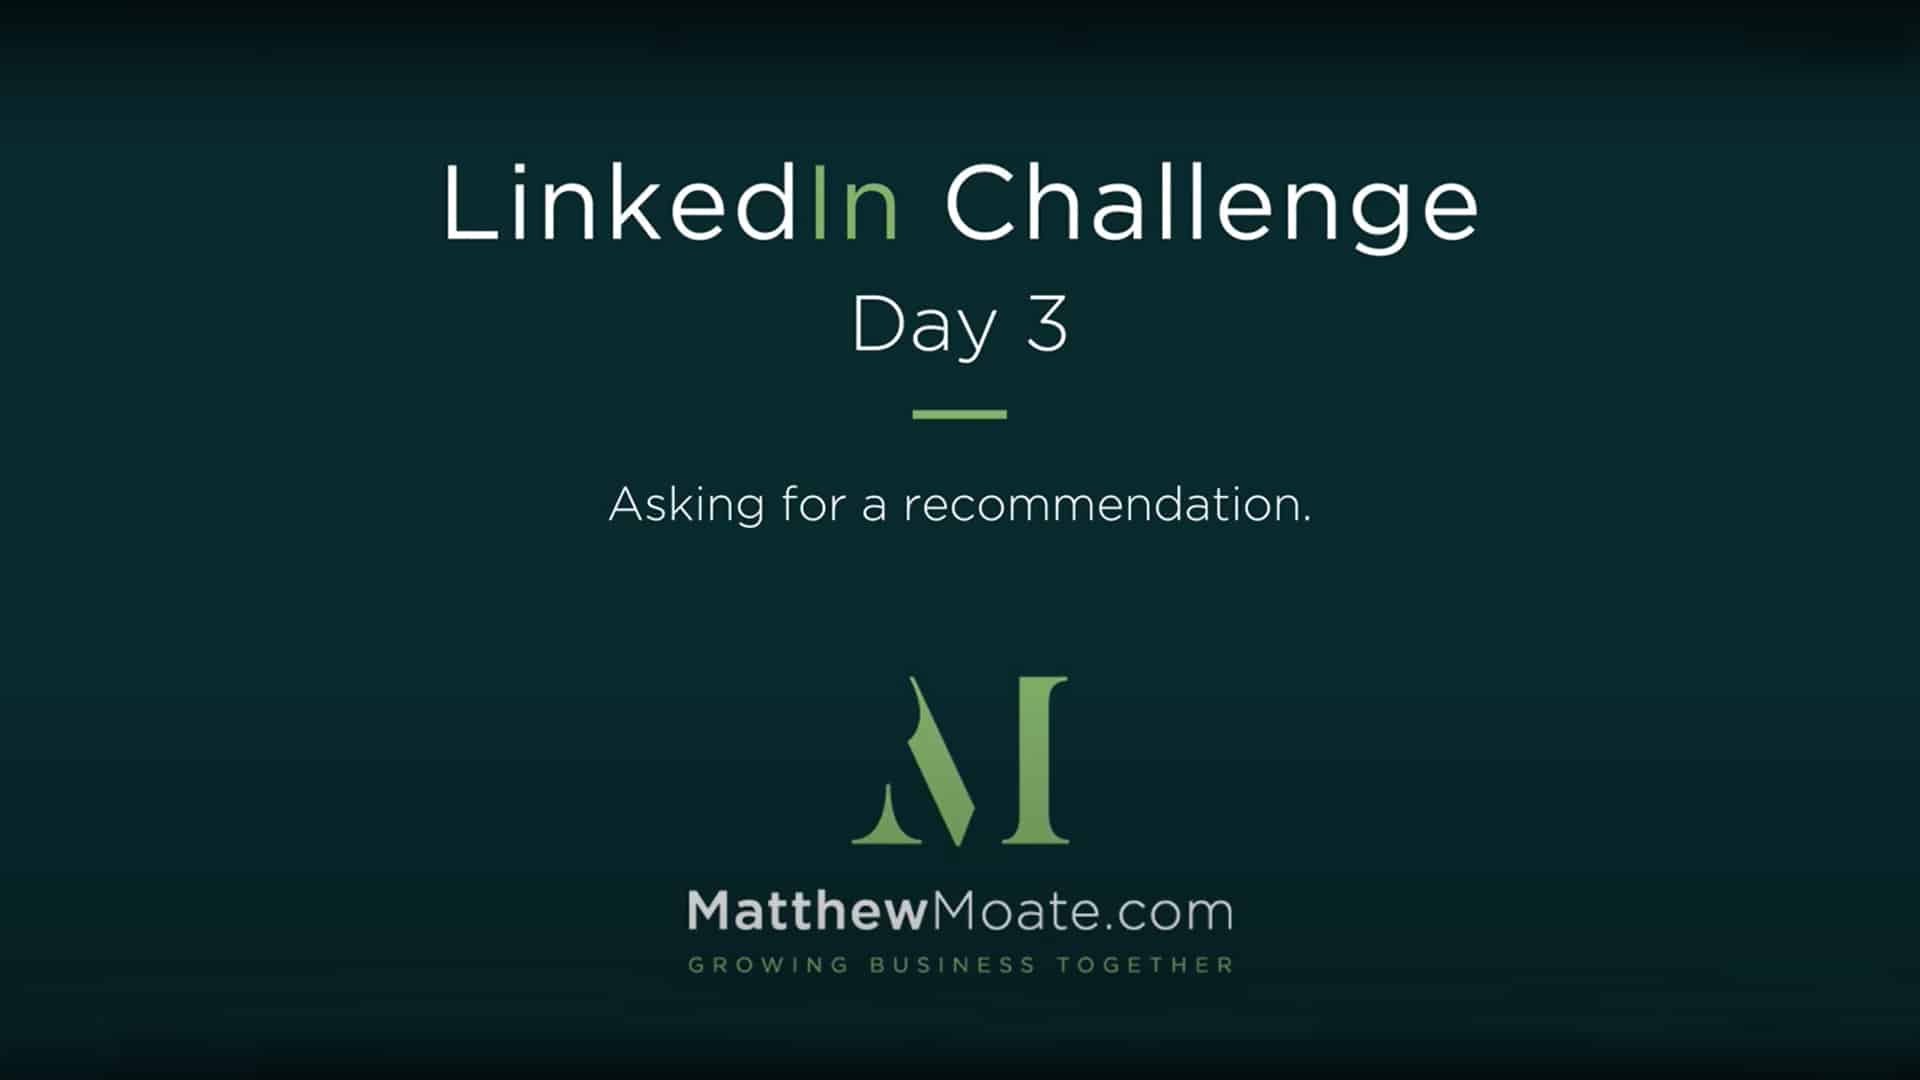 Matthew Moate's LinkedIn Challenge DAY 3